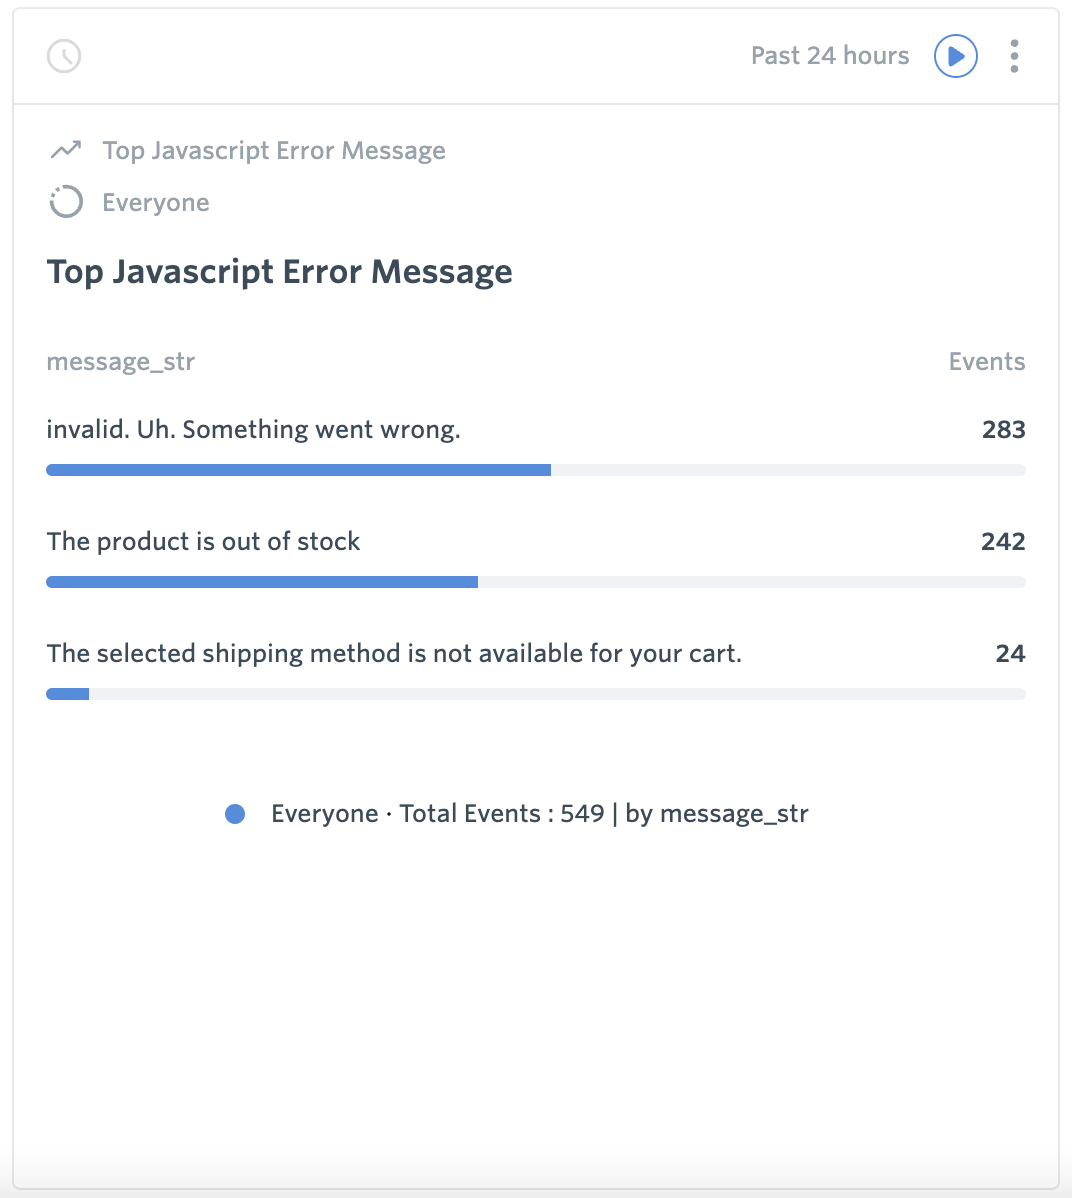 Top JavaScript Error Messages